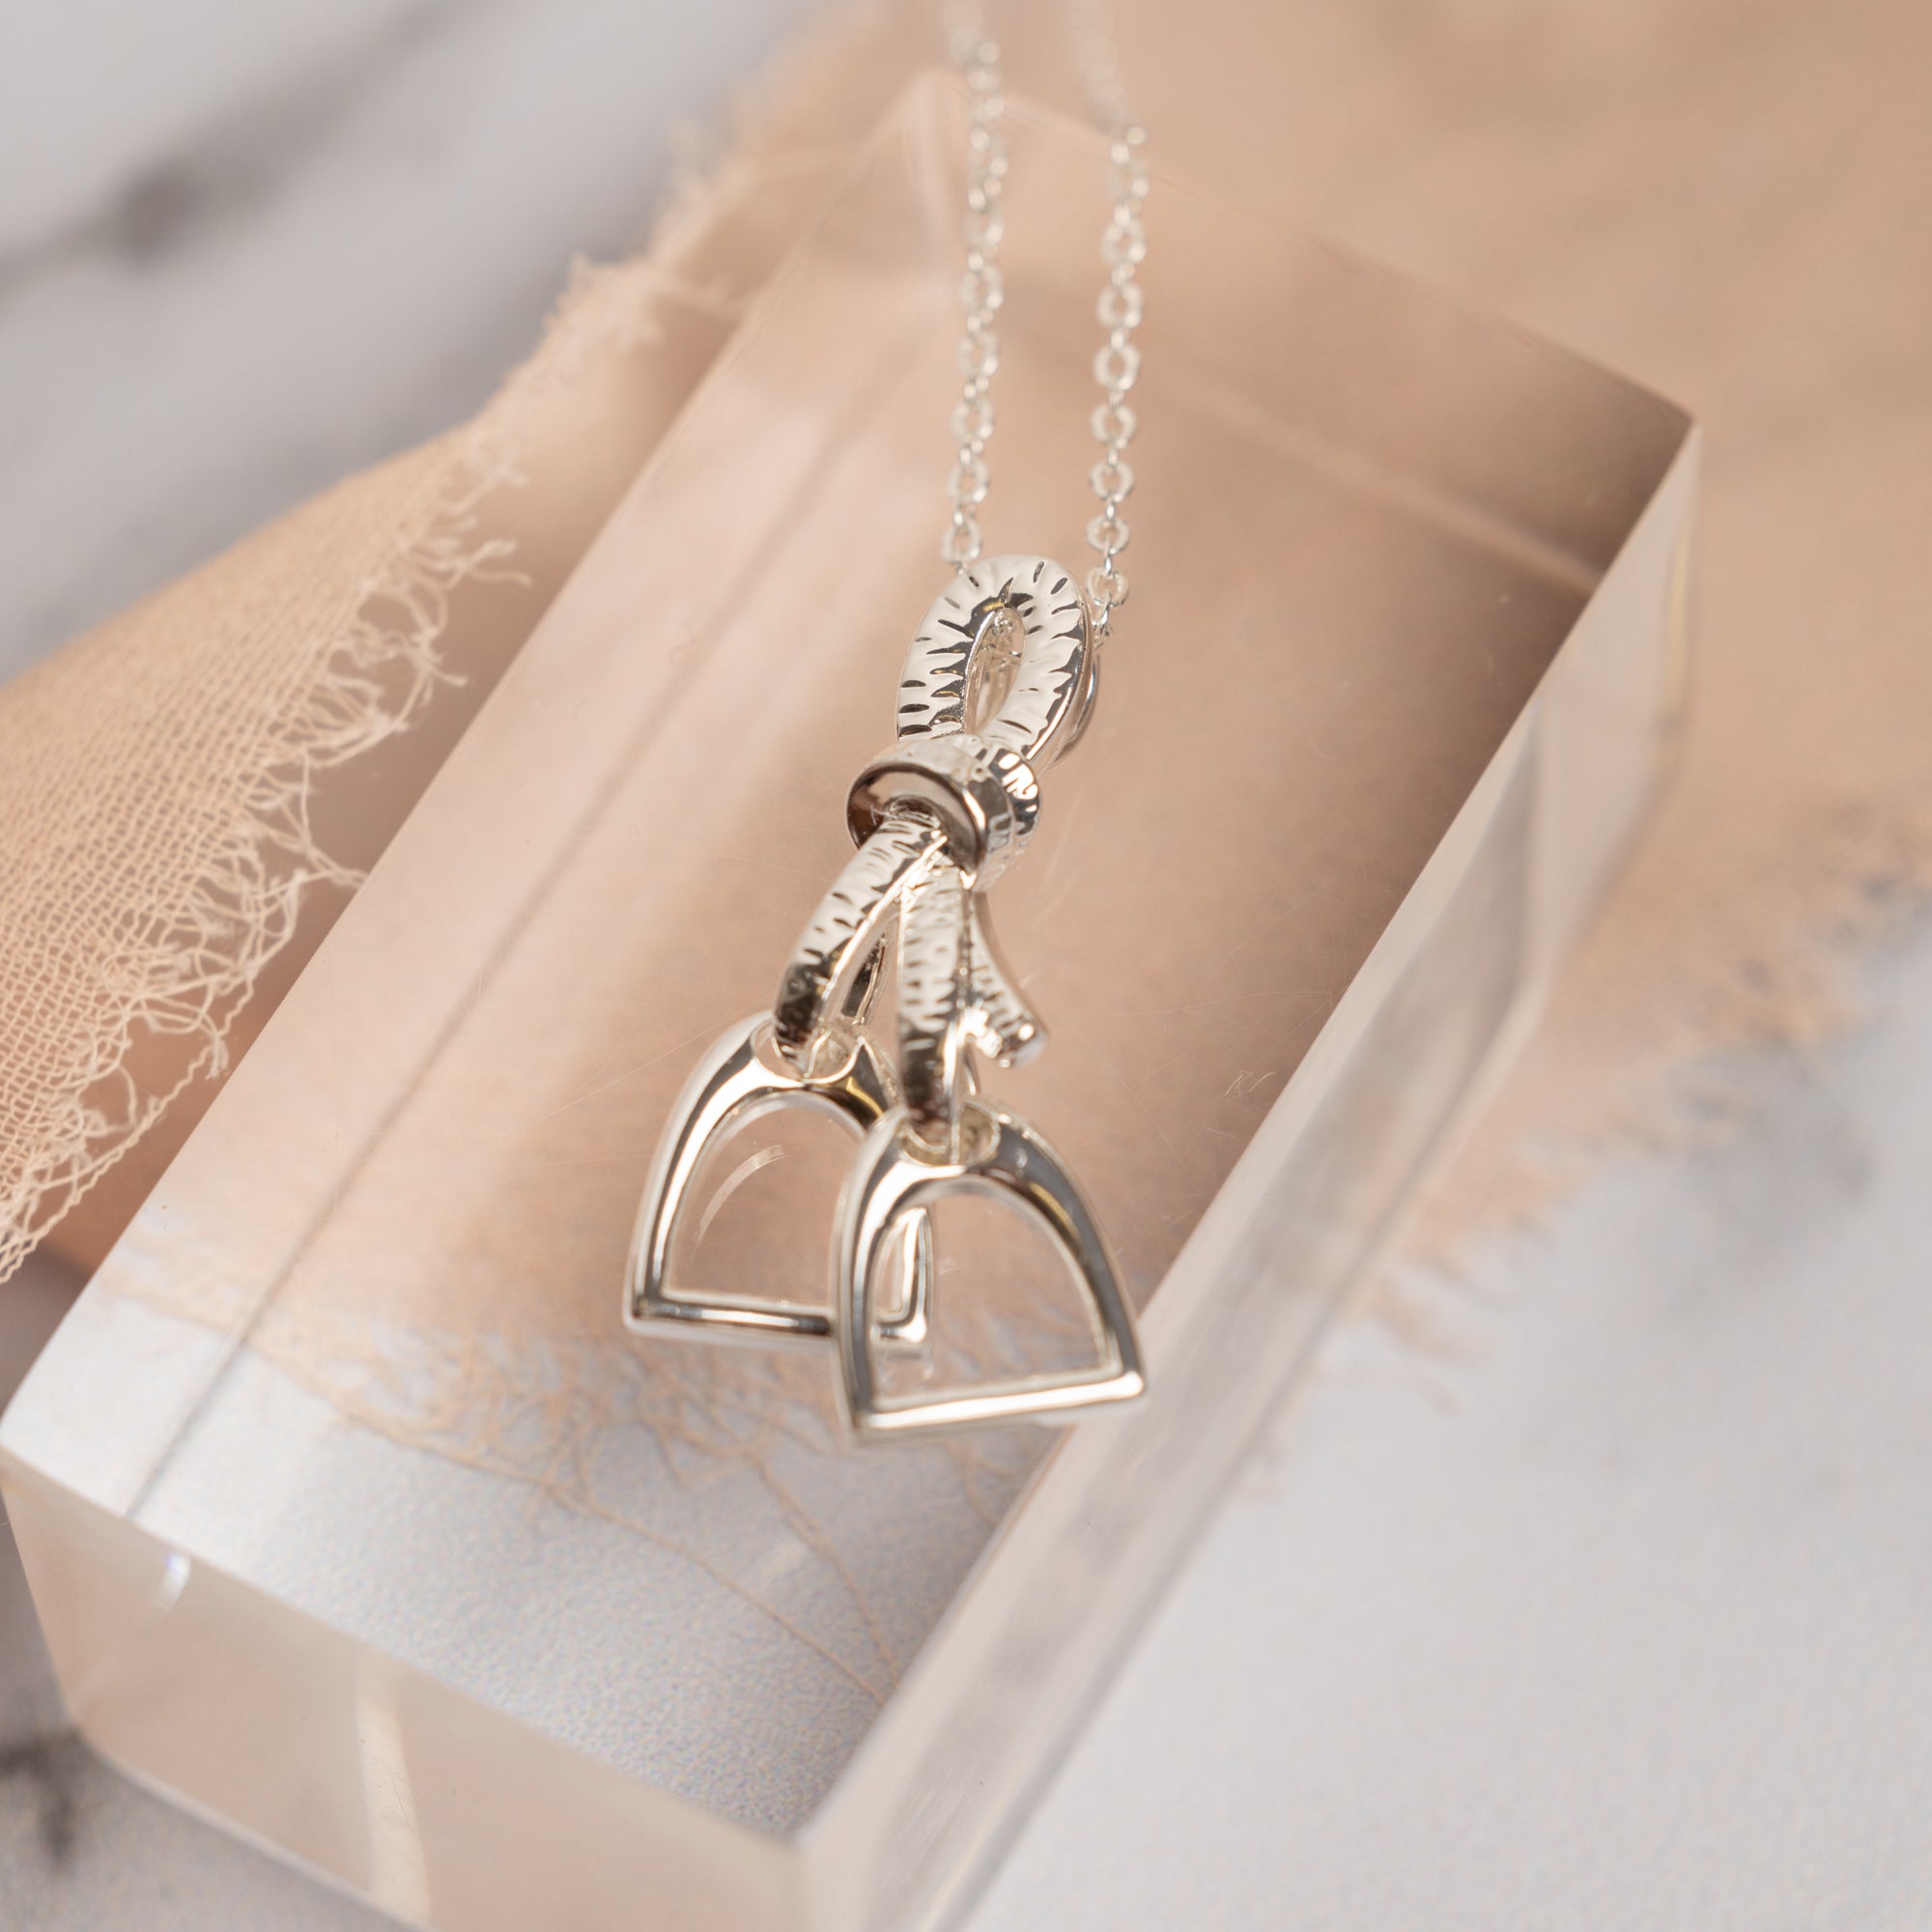 Silver Equestrian Stirrups Necklace